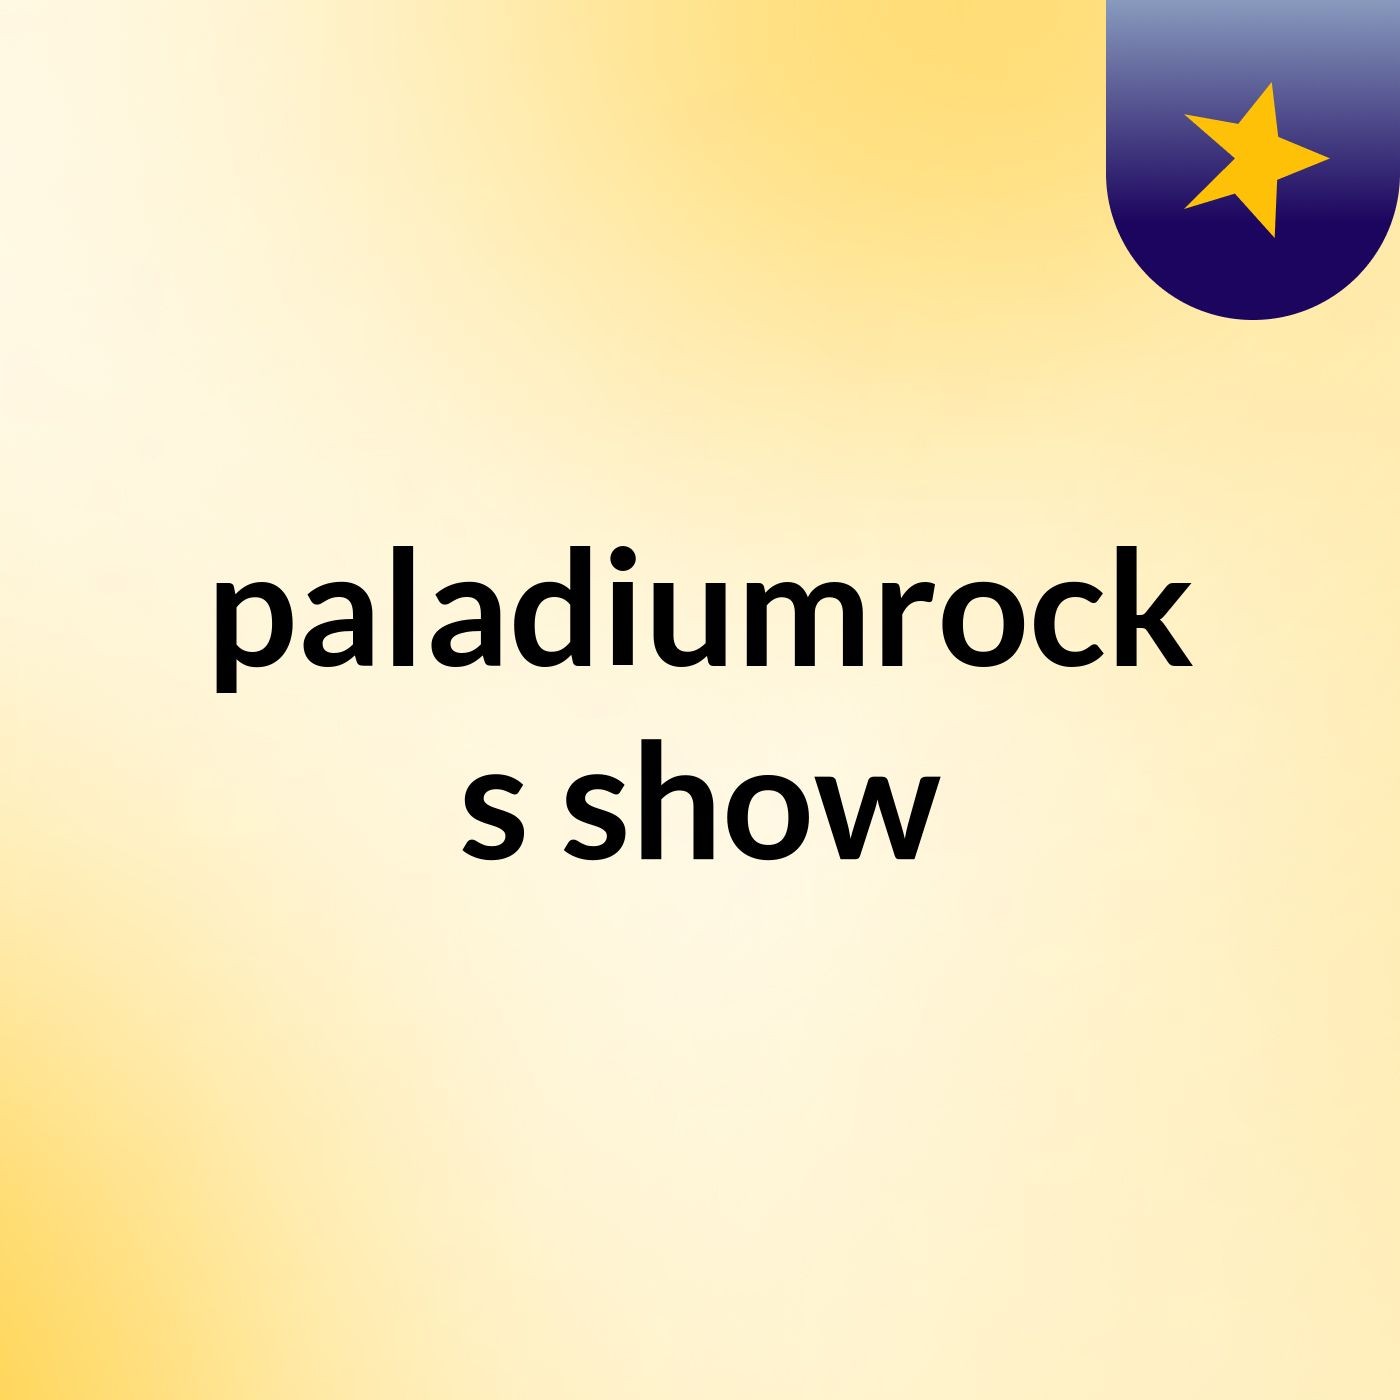 paladiumrock's show